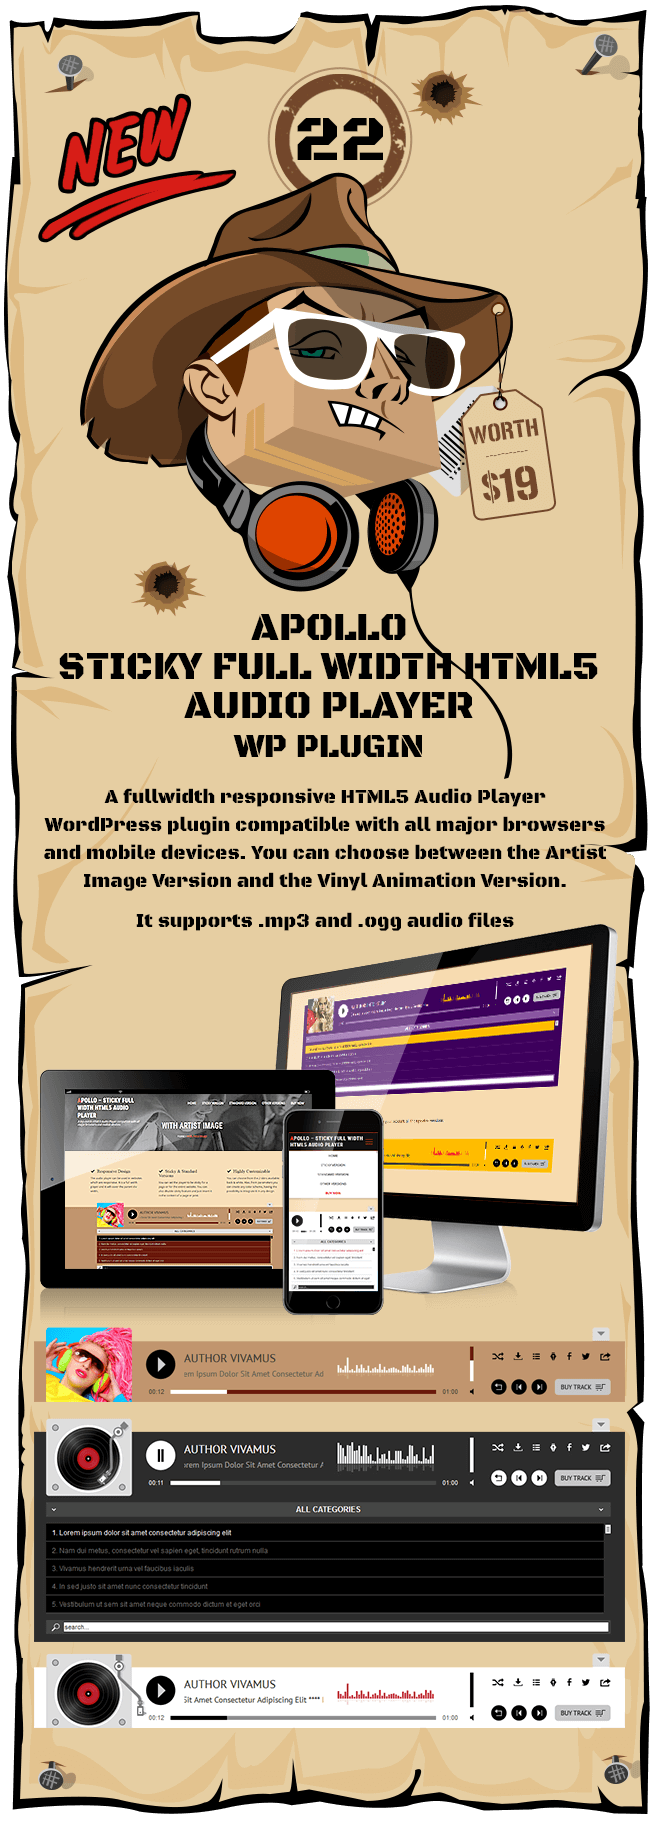 Apollo – Sticky Full Width HTML5 Audio Player WordPress Plugin